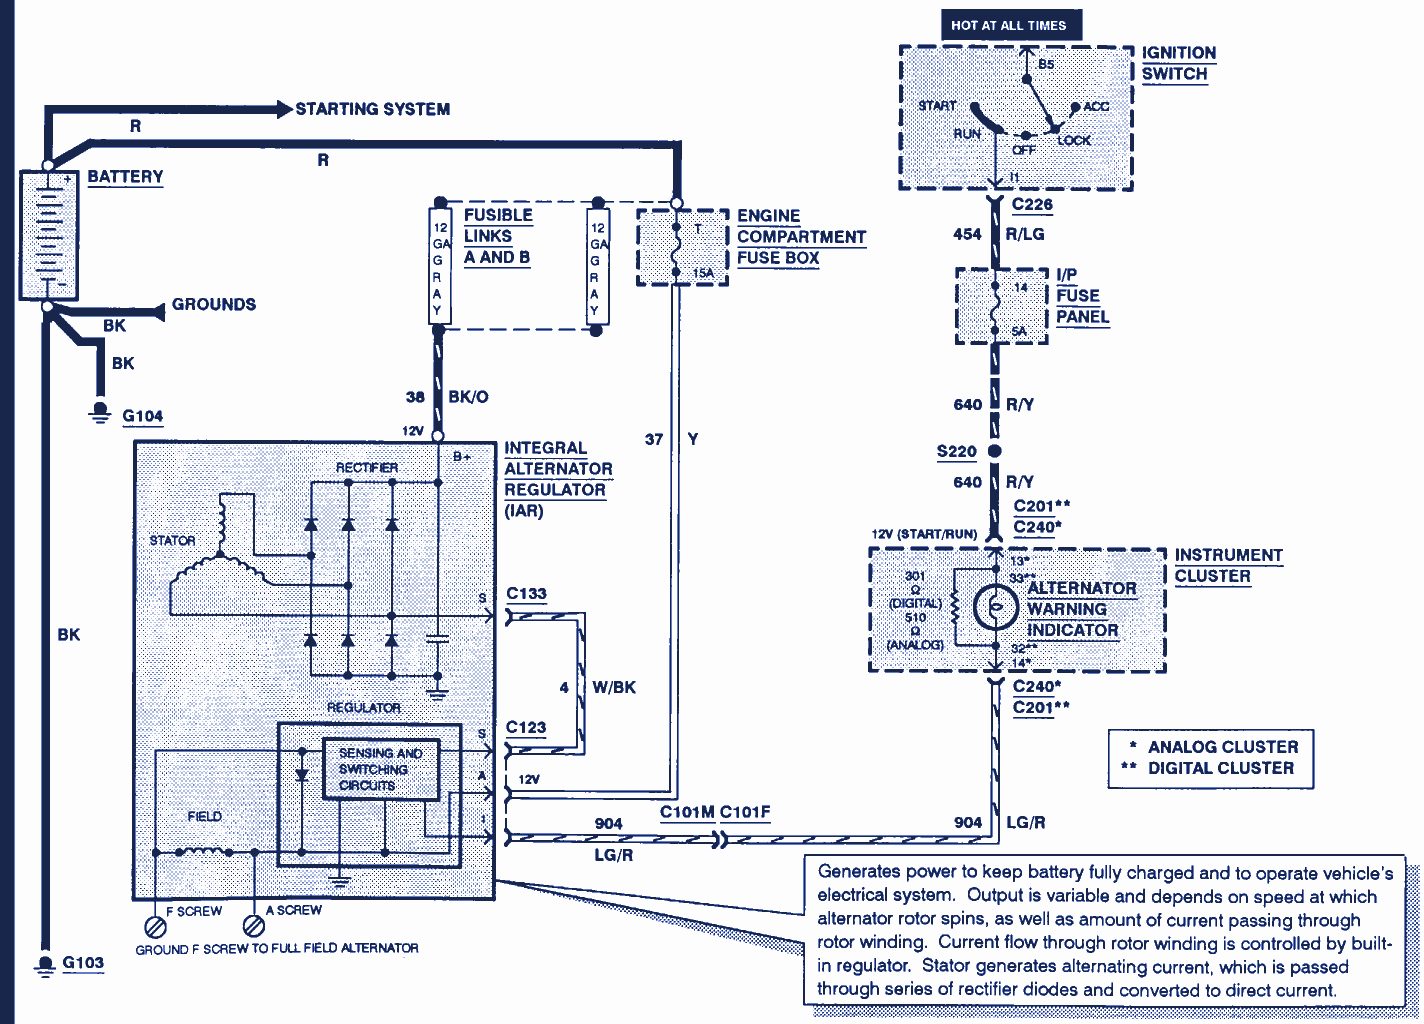 2003 Ford Taurus Spark Plug Wiring Diagram from 3.bp.blogspot.com